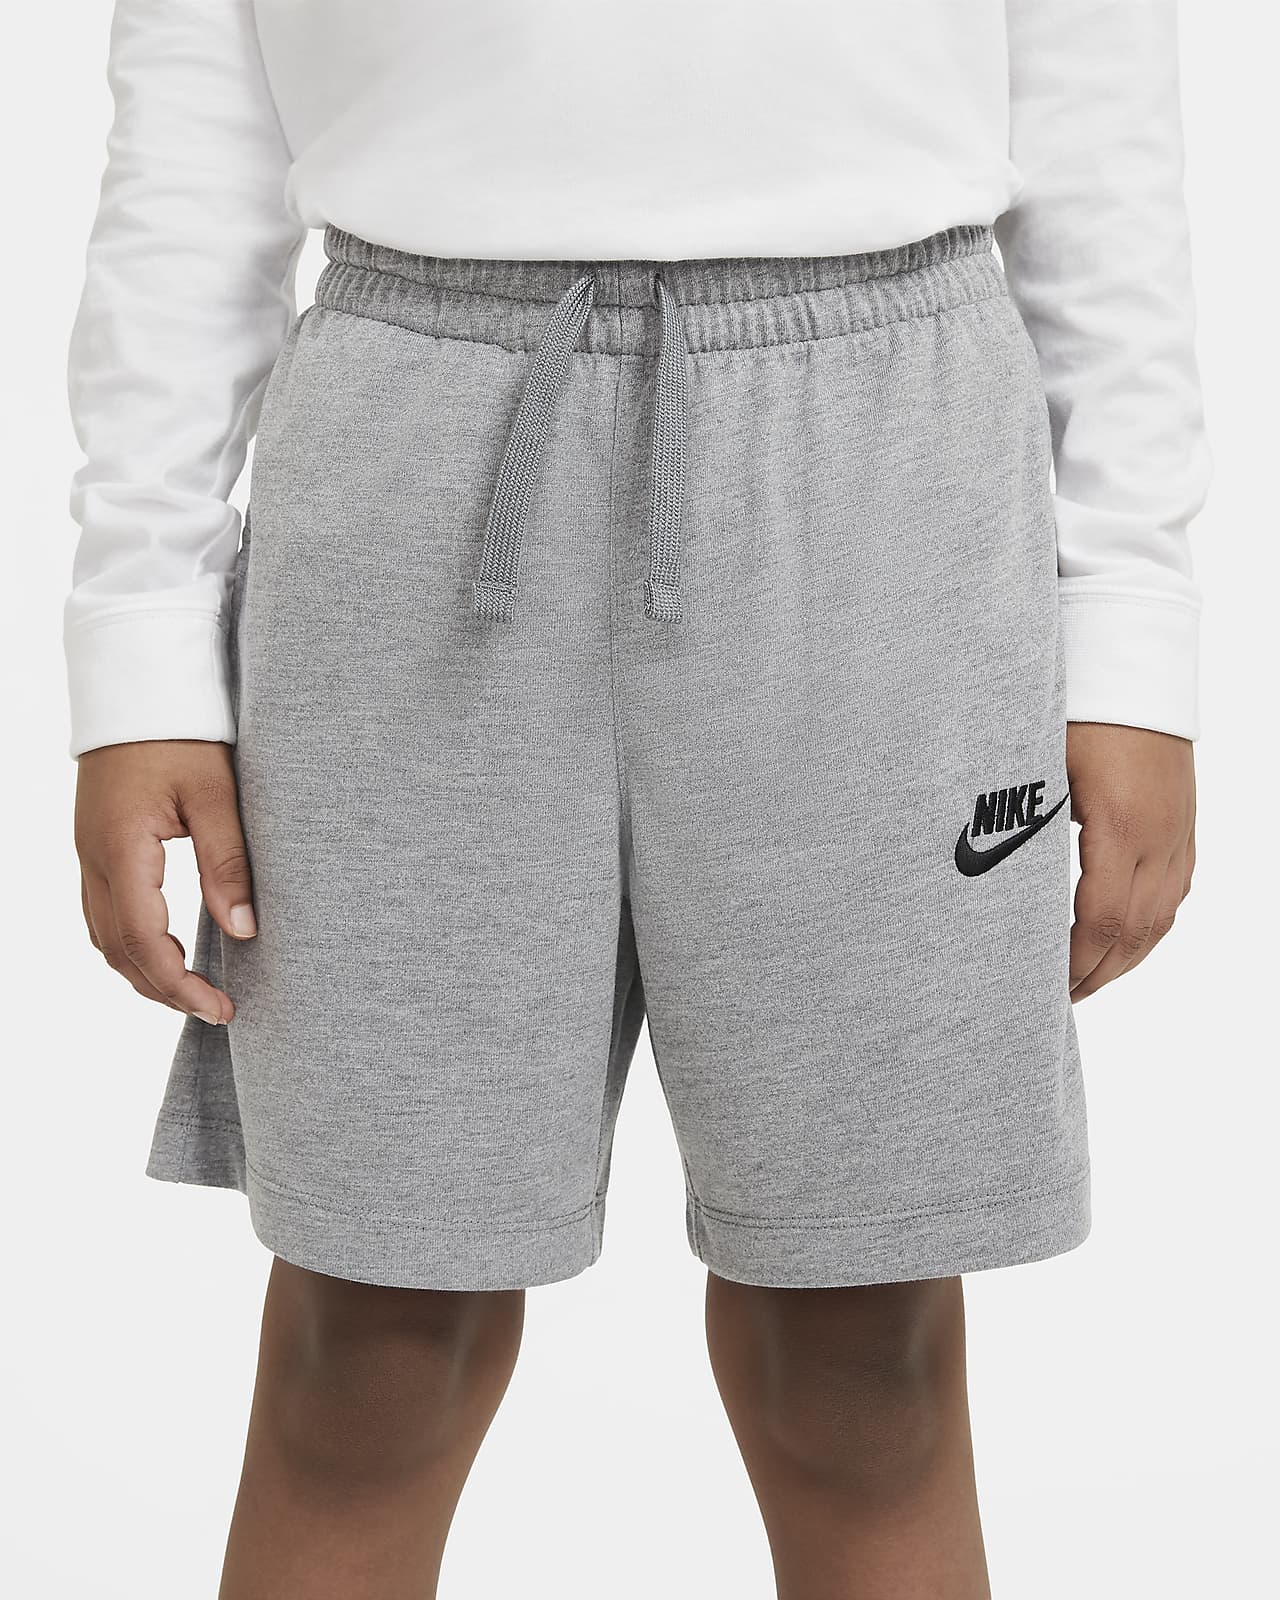 Men's Nike Grey Shorts, Jersey & Sports Shorts